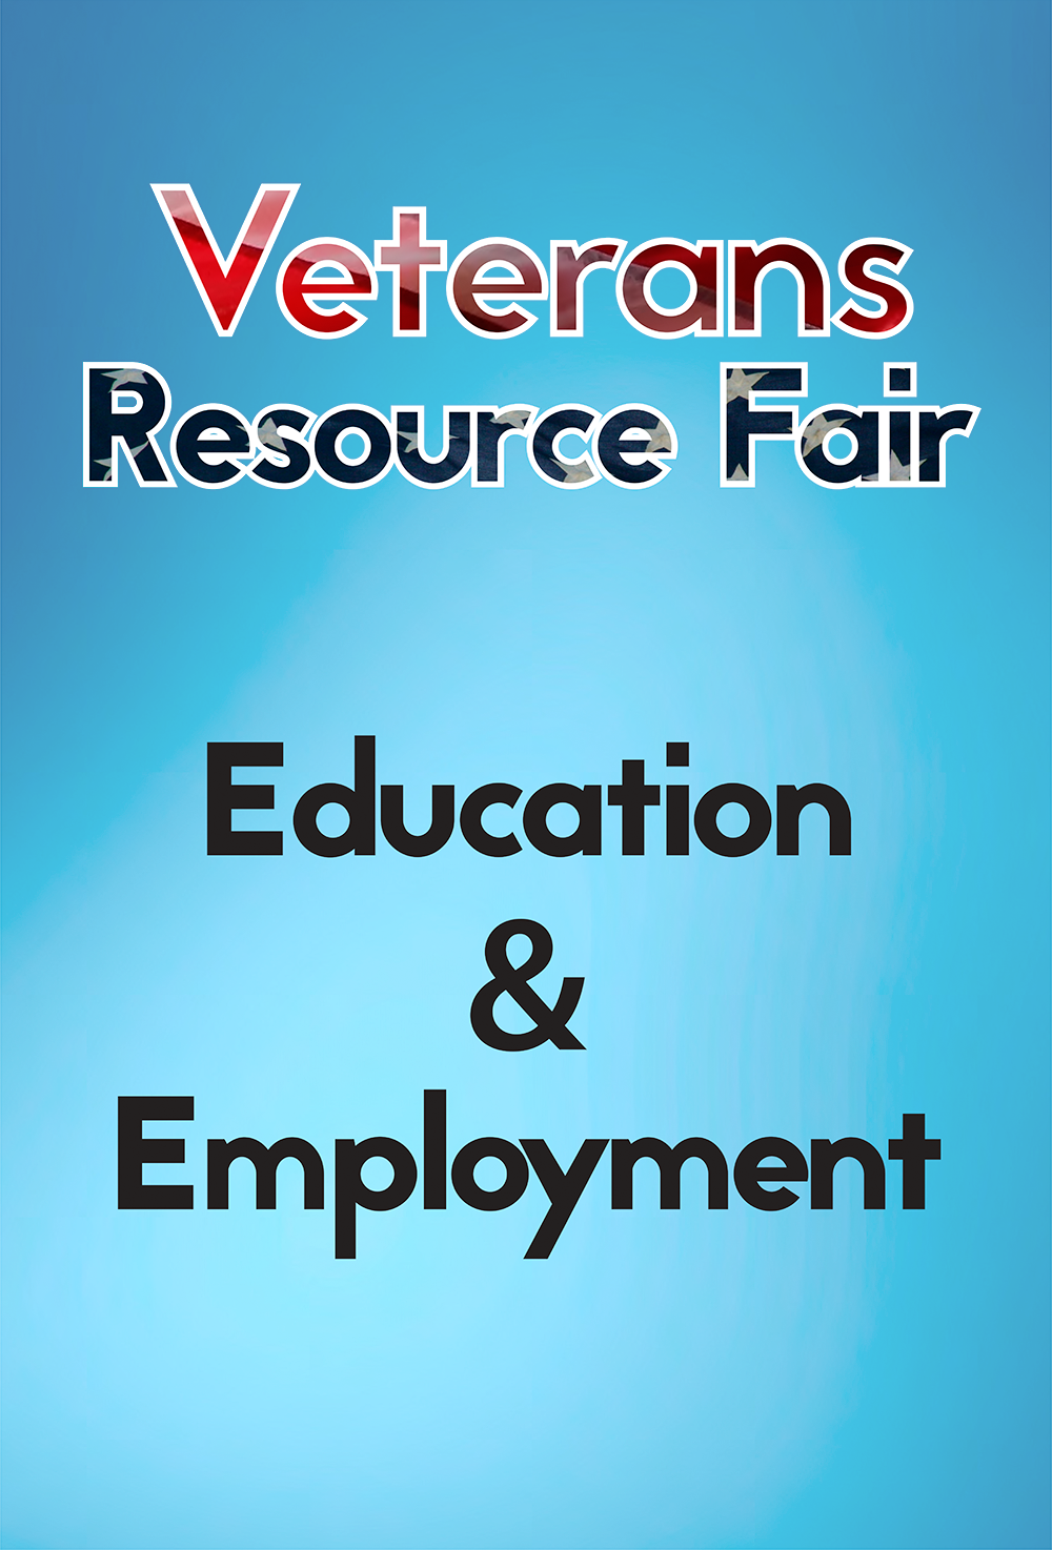 Governor's Resource Fair event signage